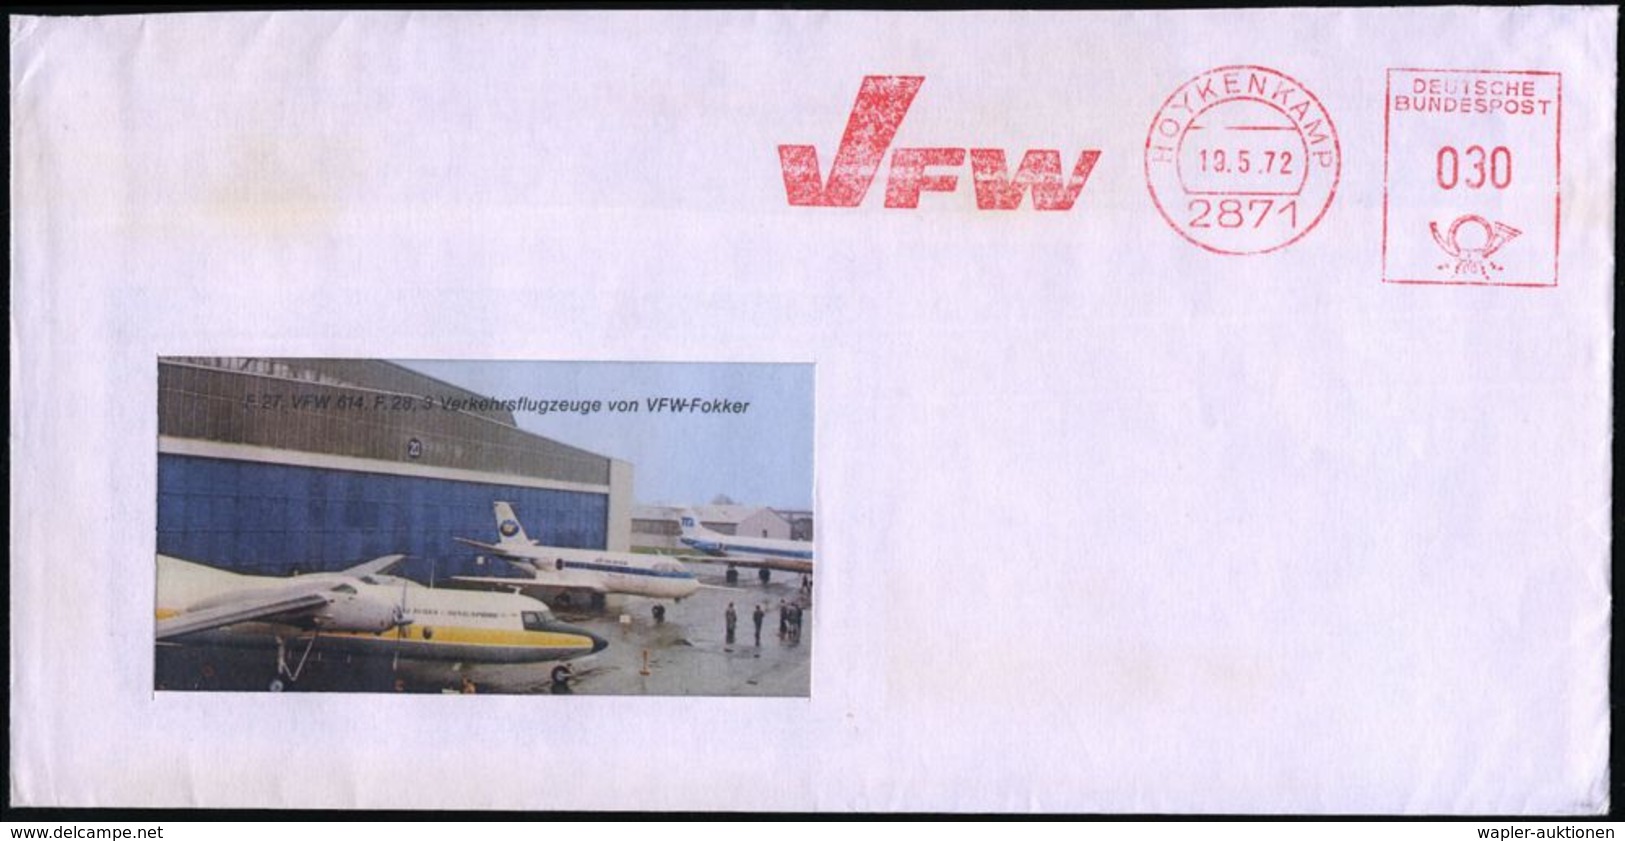 FLUGZEUGINDUSTRIE & -TYPEN : 2871 HOYKENKAMP/ VFW 1972 (19.5.) AFS = V Ereinigte Flugzeug-Werke Fokker GmbH A. Reklame-B - Flugzeuge